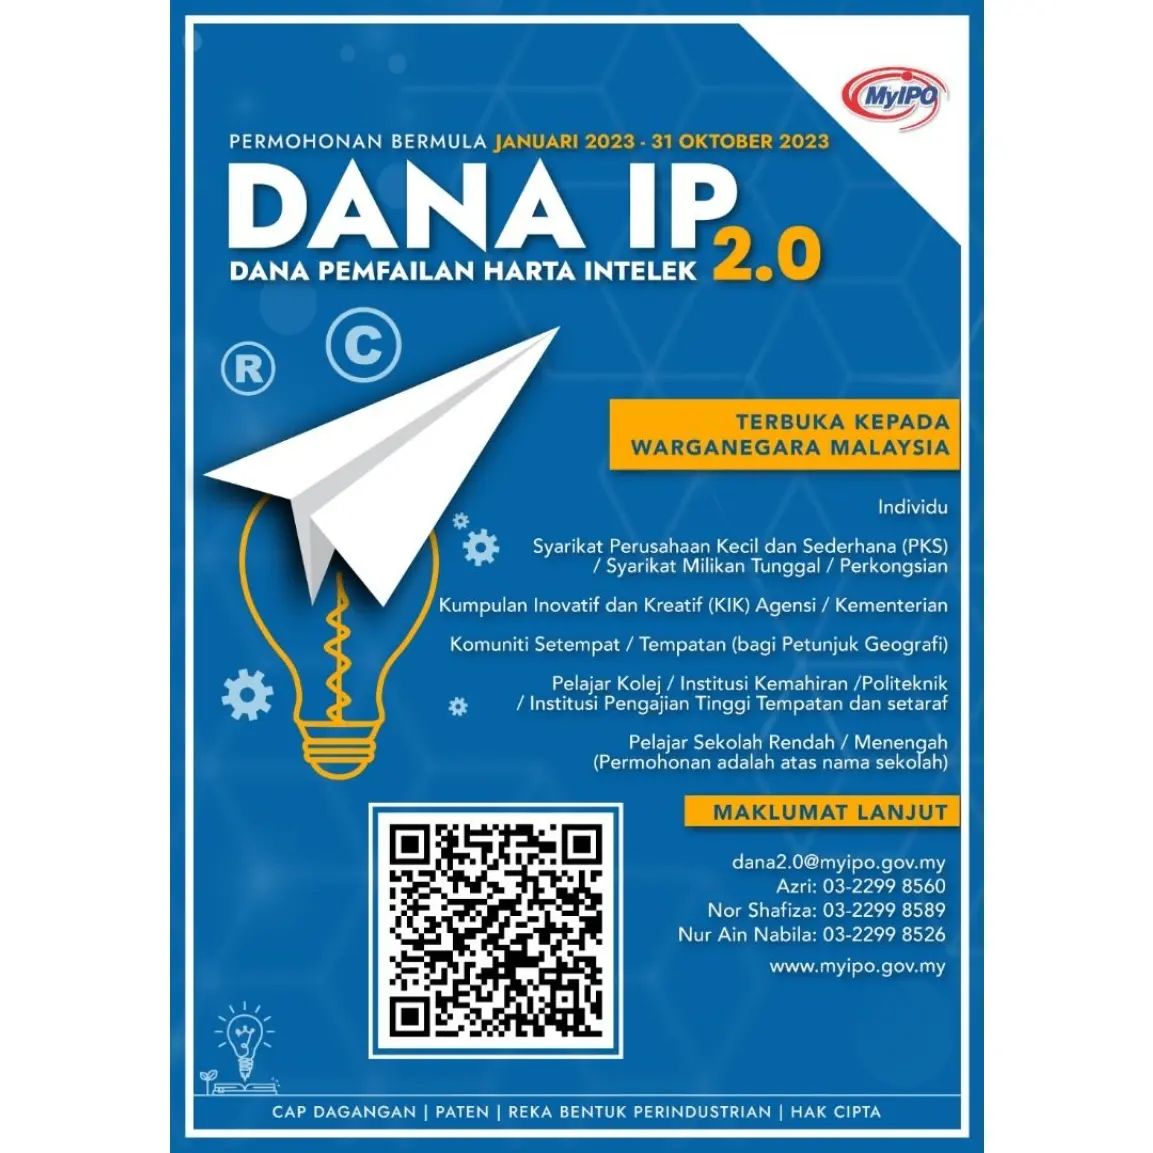 #ICMCShare Dana Pemfailan Harta Intelek (Dana IP 2.0) Year 2023